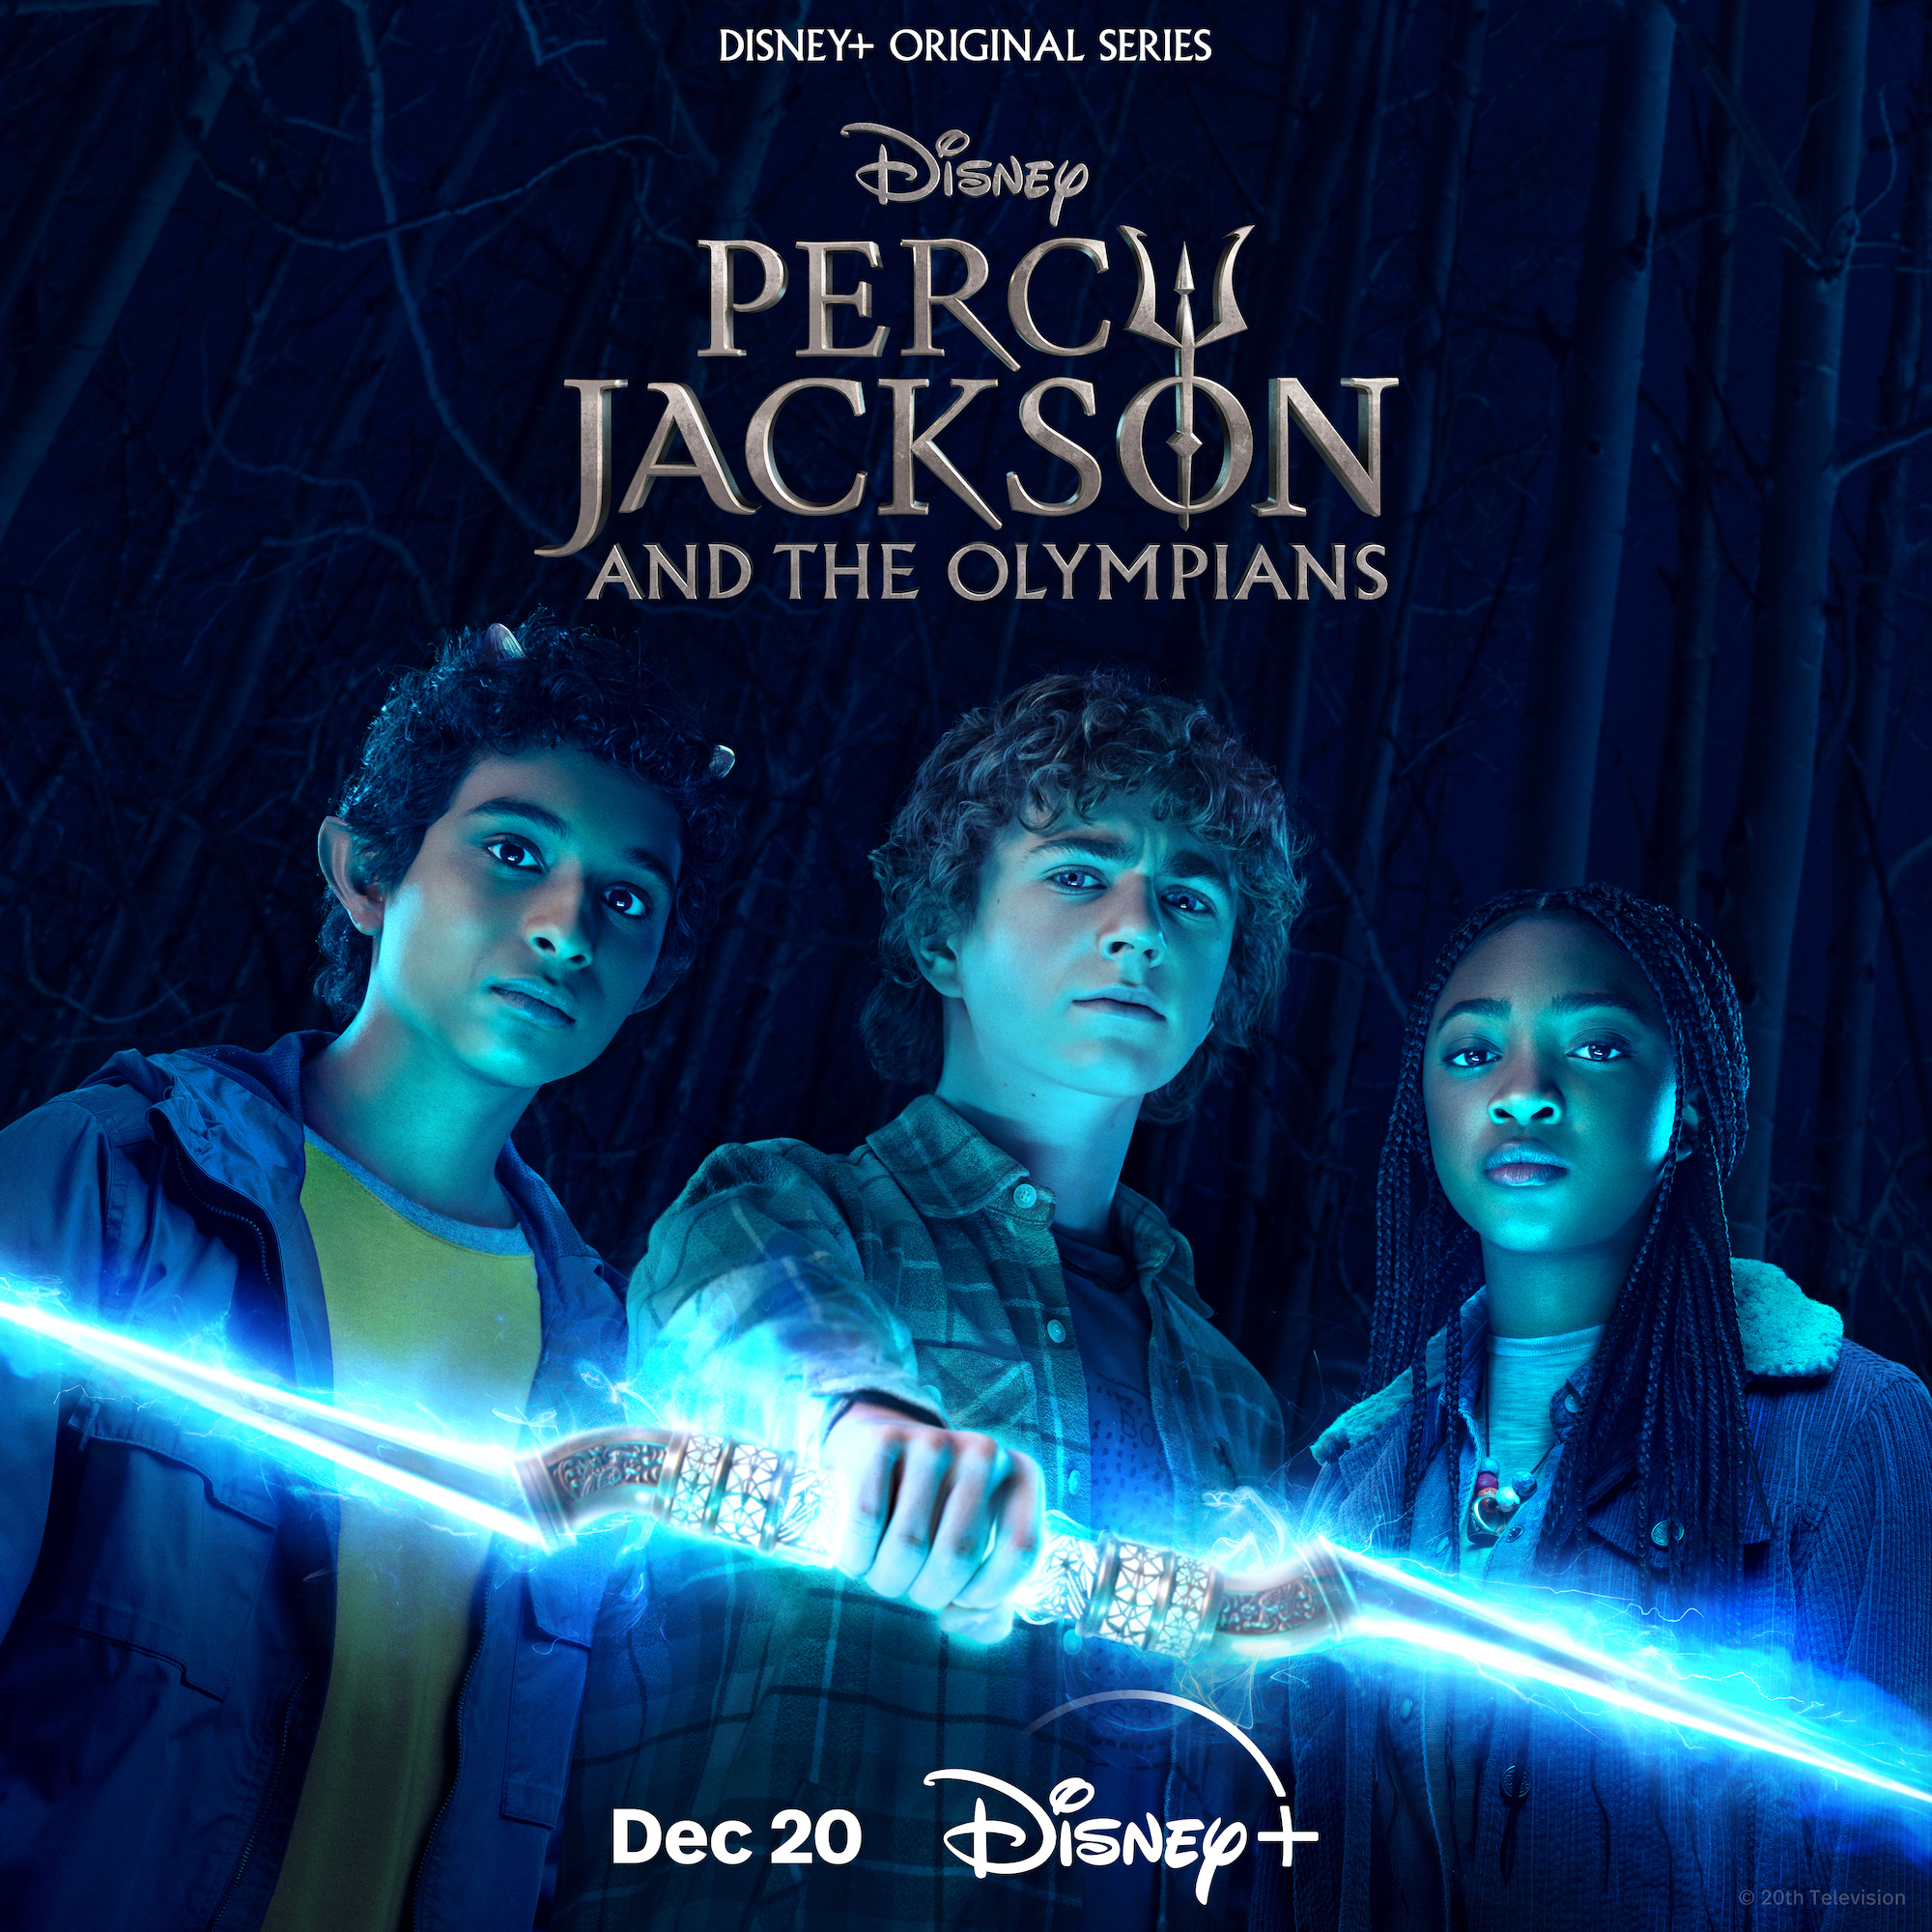 ‘Percy Jackson’ debut season takes world by storm